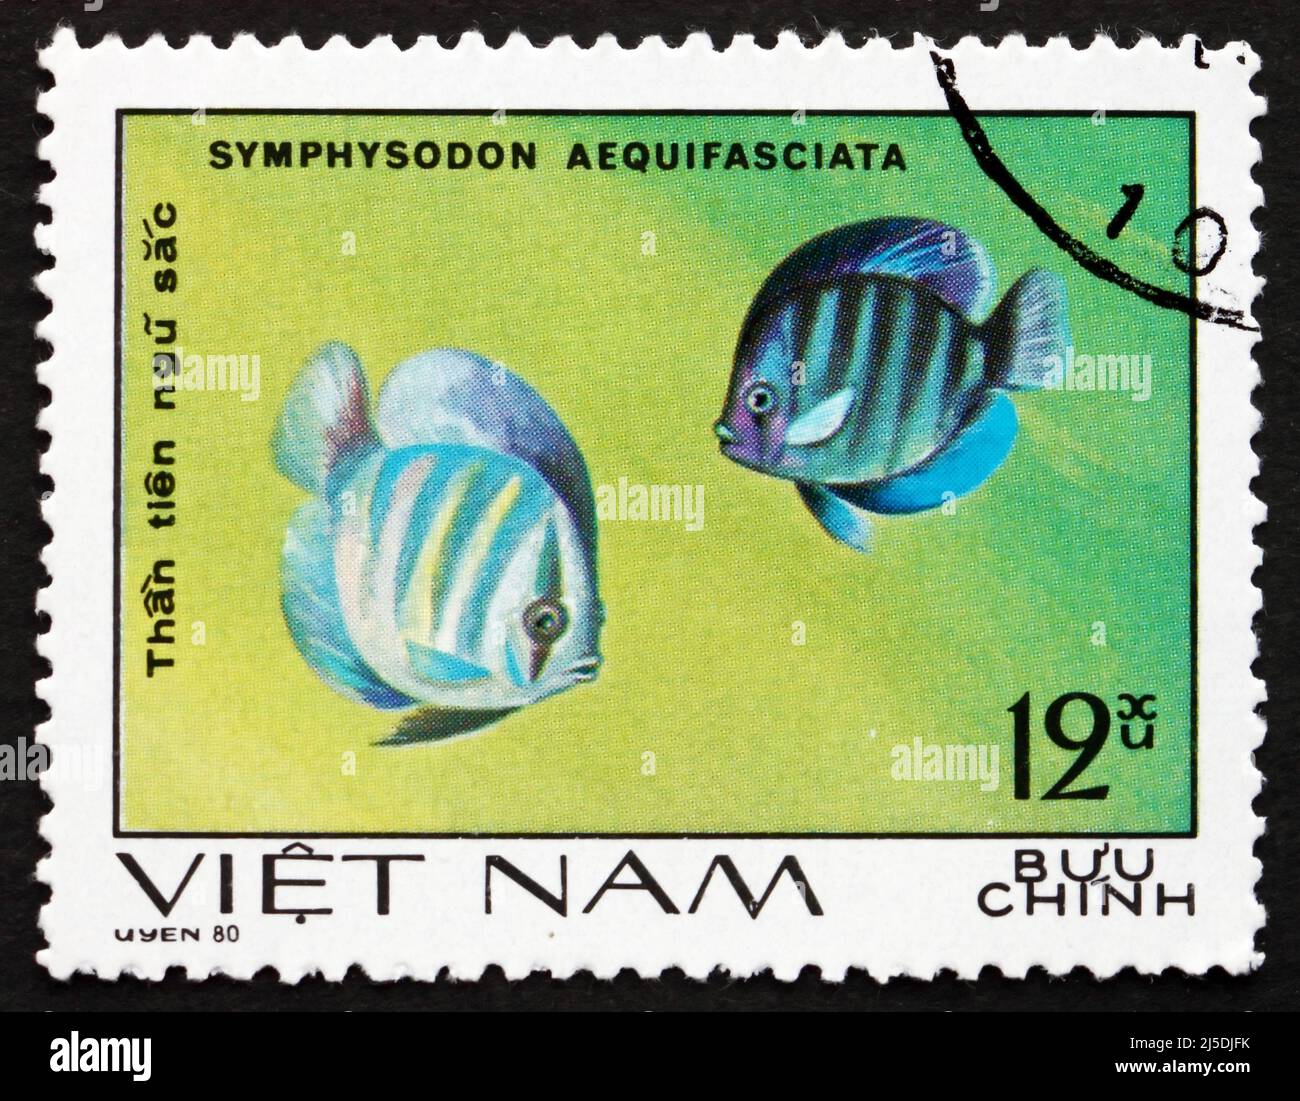 VIETNAM - CIRCA 1981: a stamp printed in Vietnam shows Blue Discus, Symphysodon Aequifasciata, Fish, circa 1981 Stock Photo